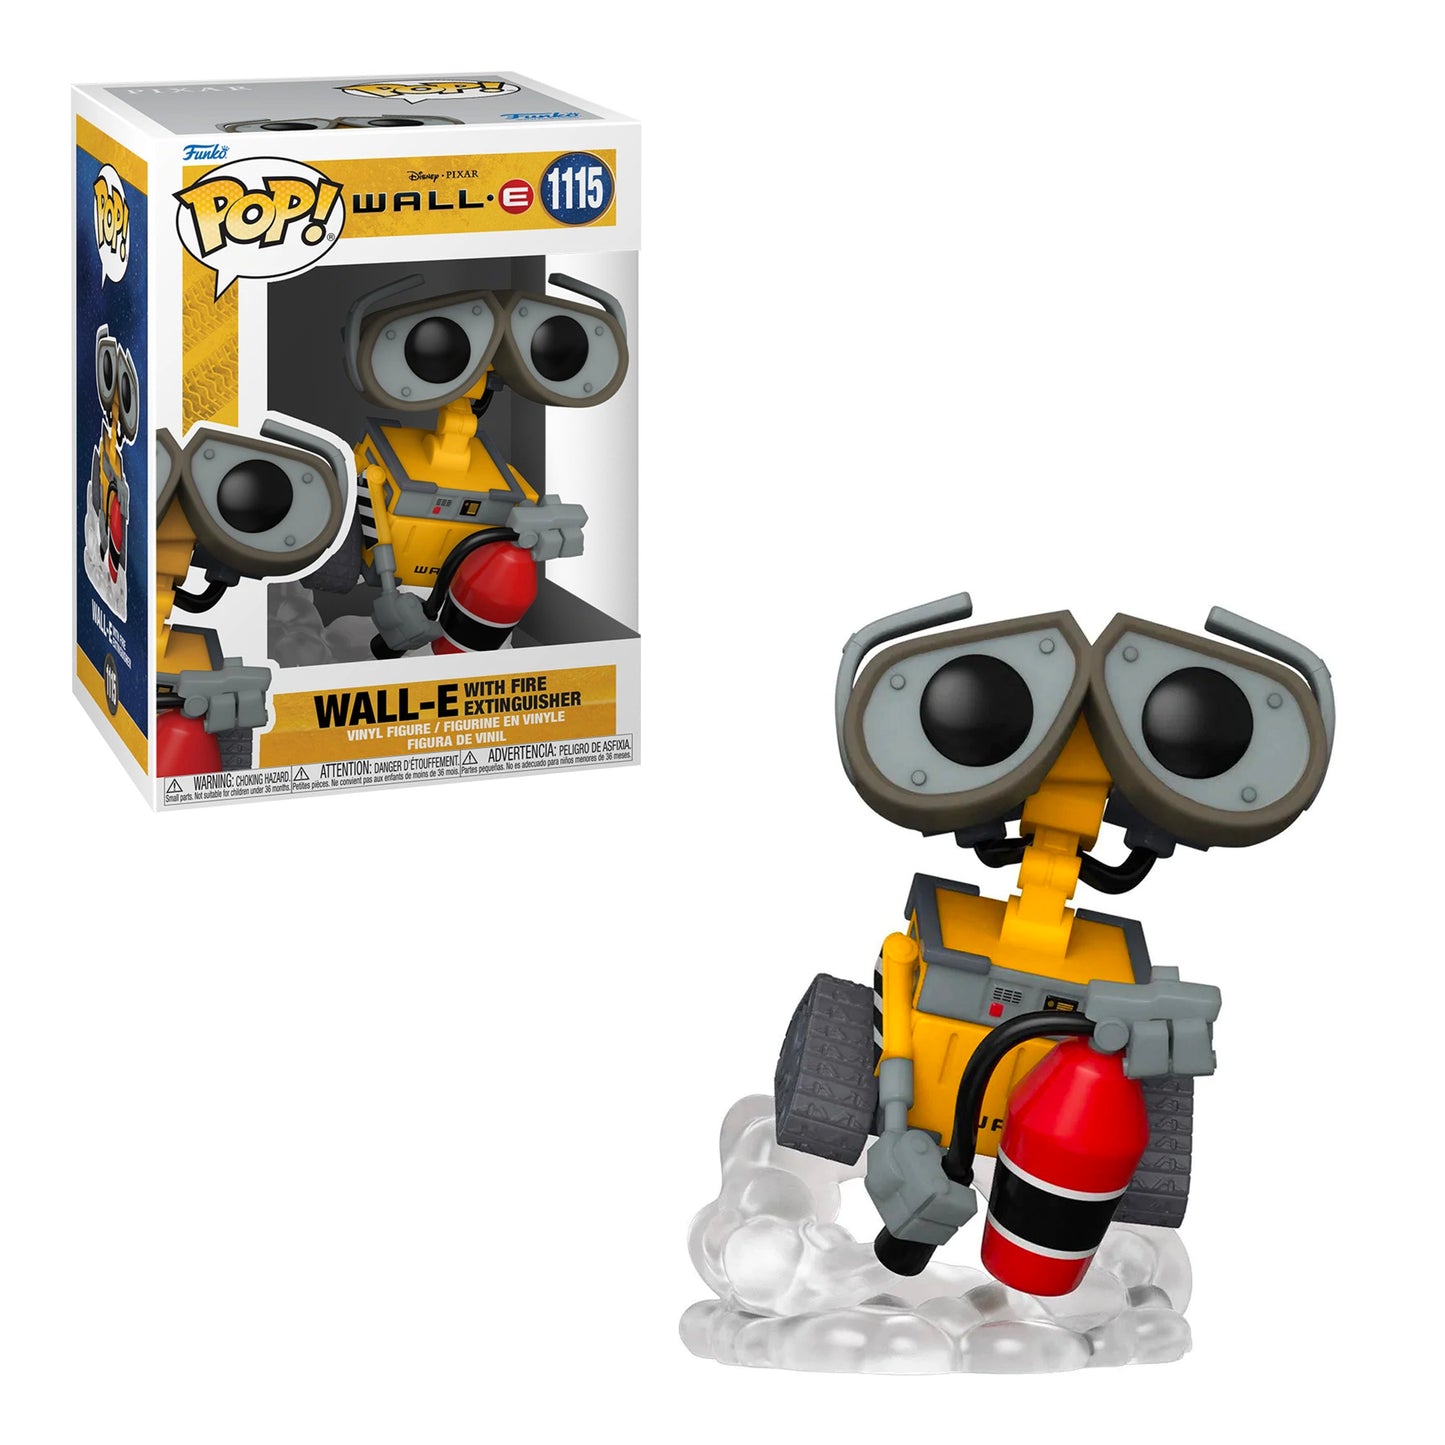 Funko Pop! Disney: Wall-E - Wall-E with Fire Extinguisher #1115